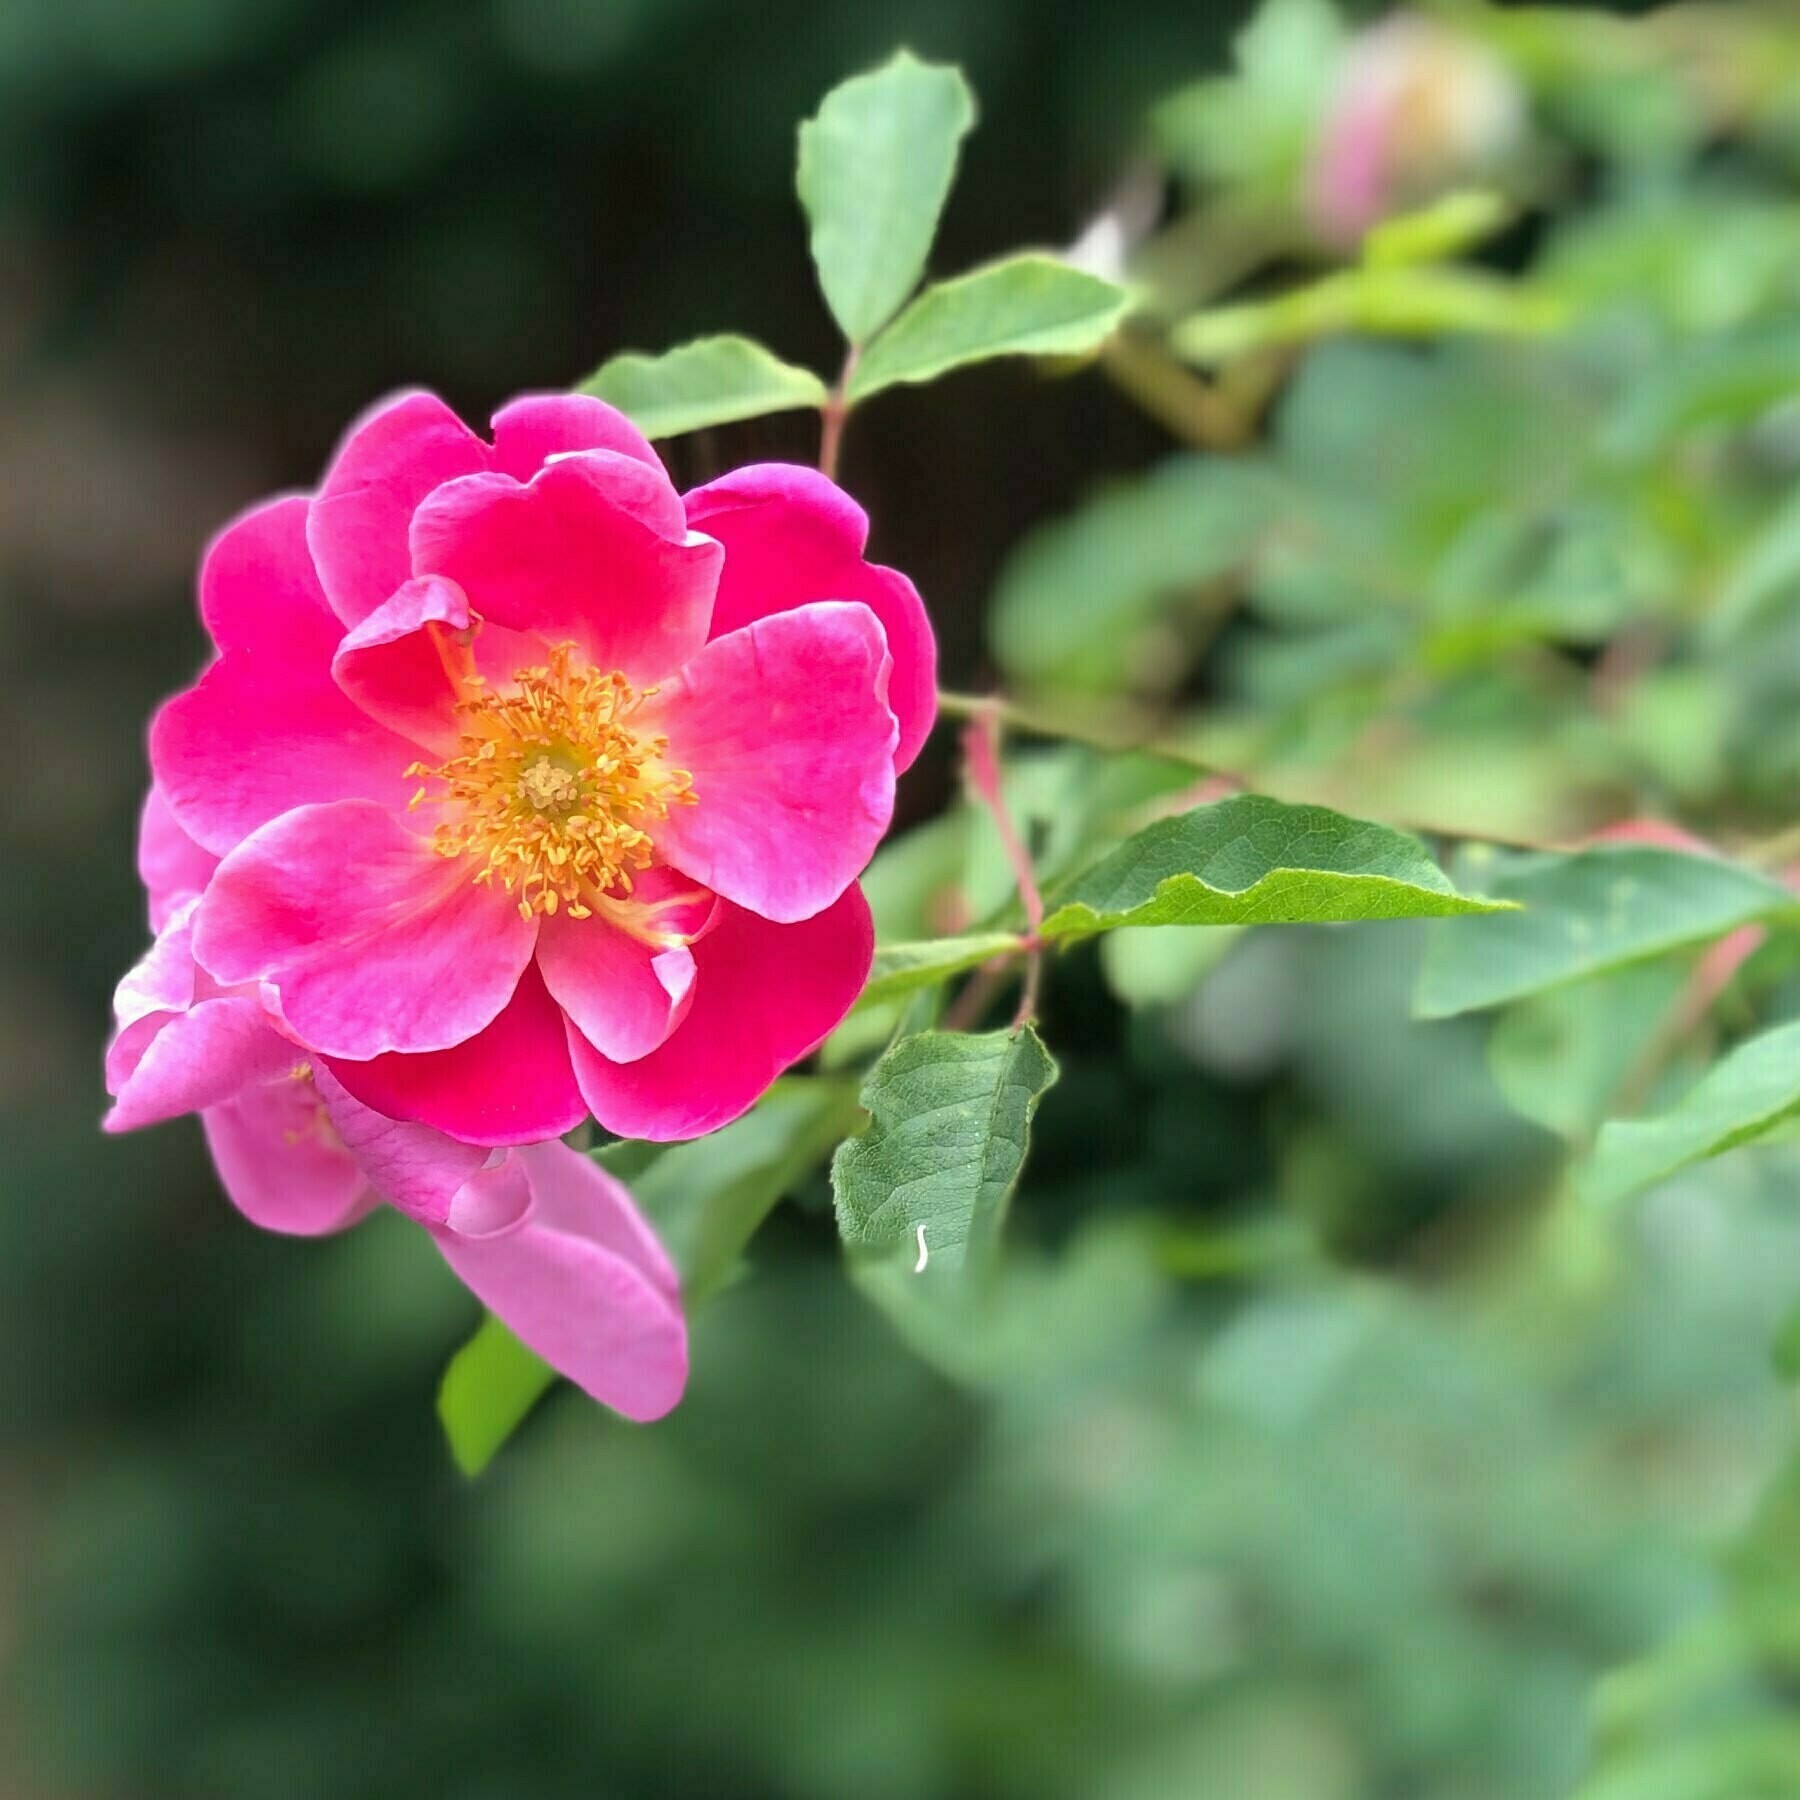 An Ann rose in our garden. 